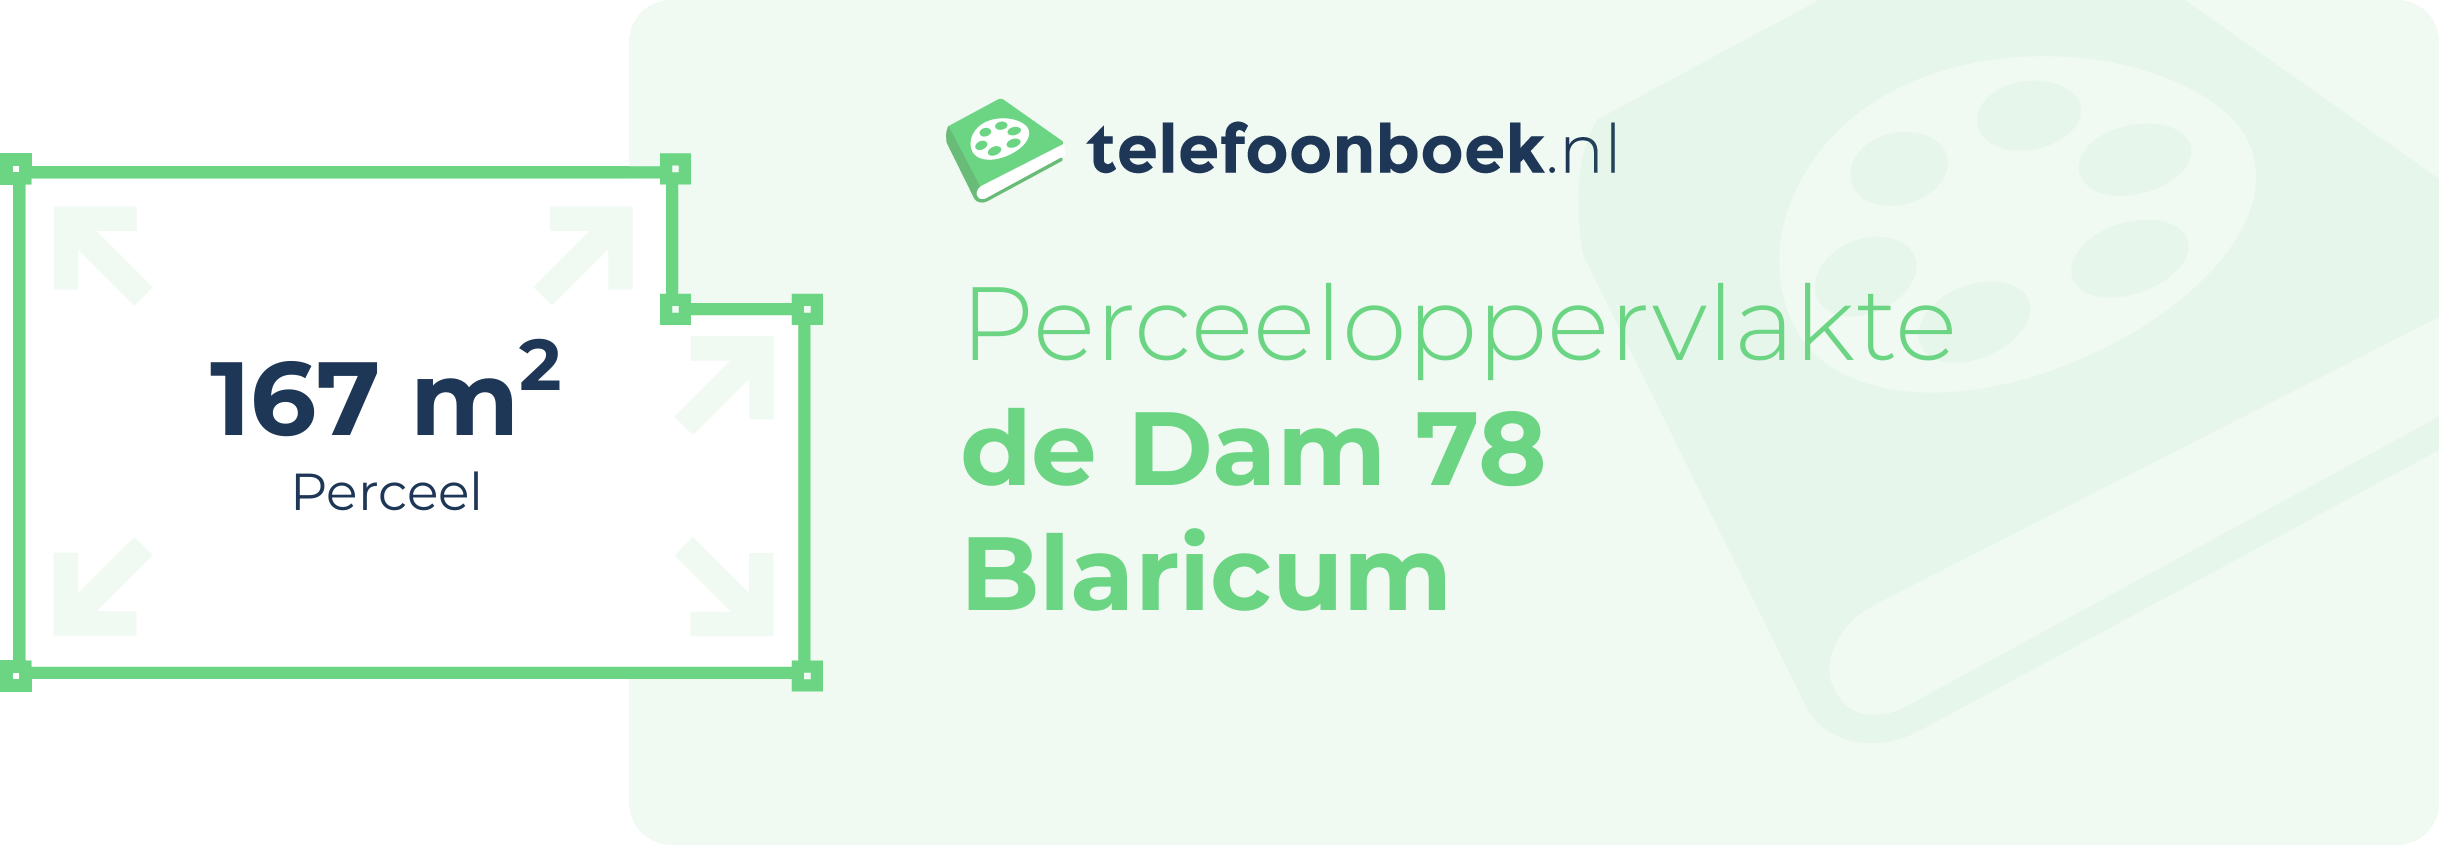 Perceeloppervlakte De Dam 78 Blaricum